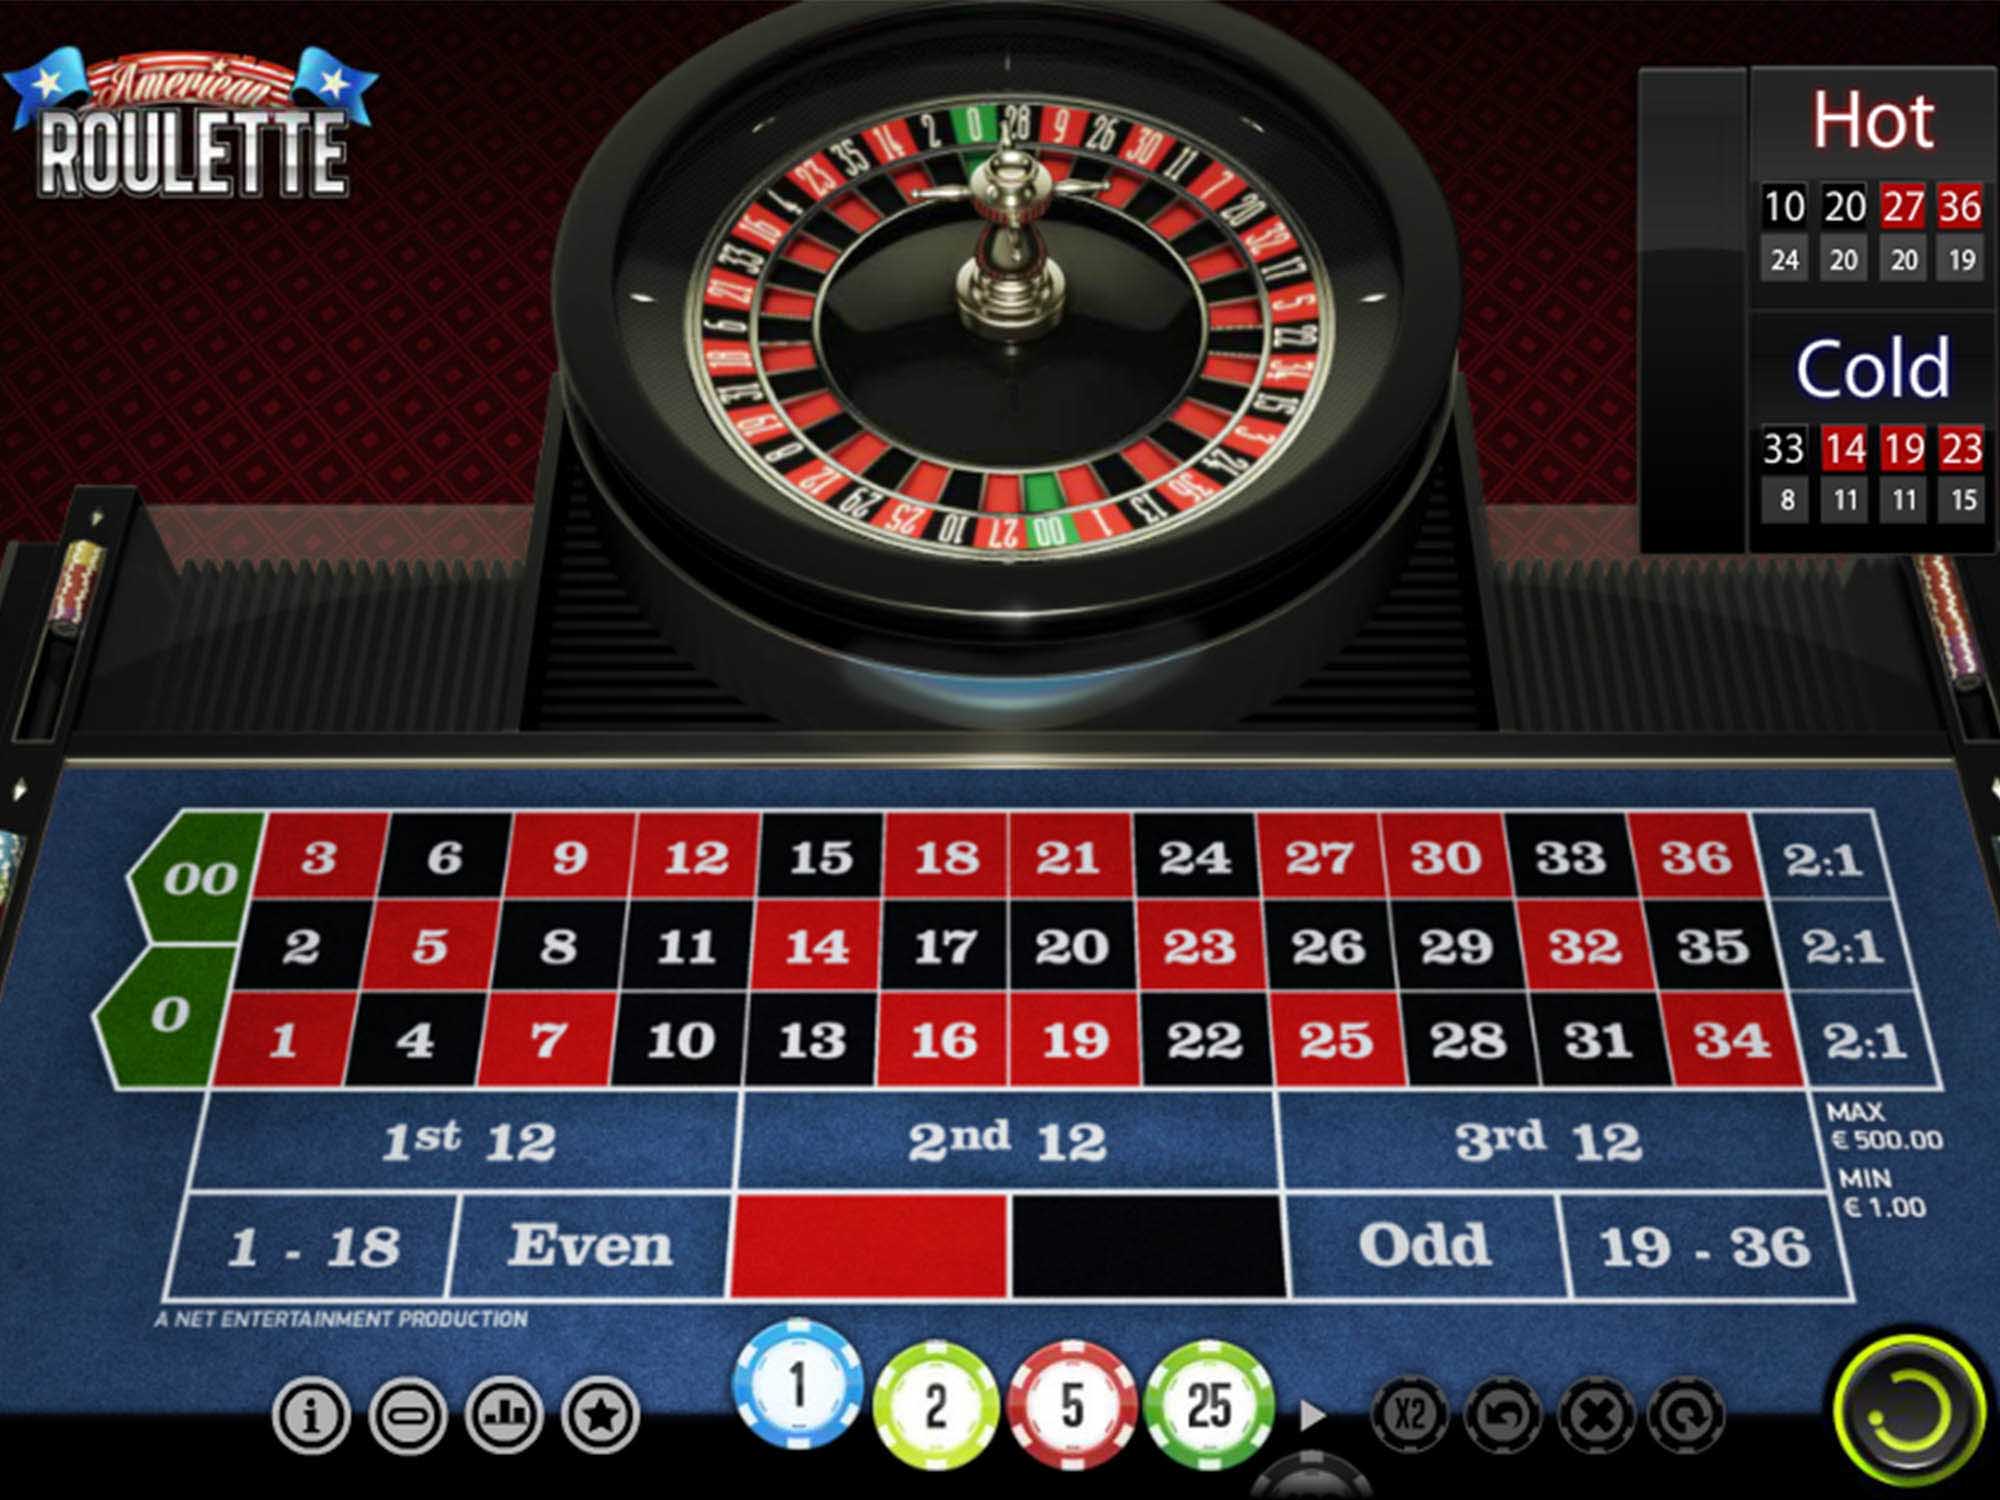 app bet365 casino